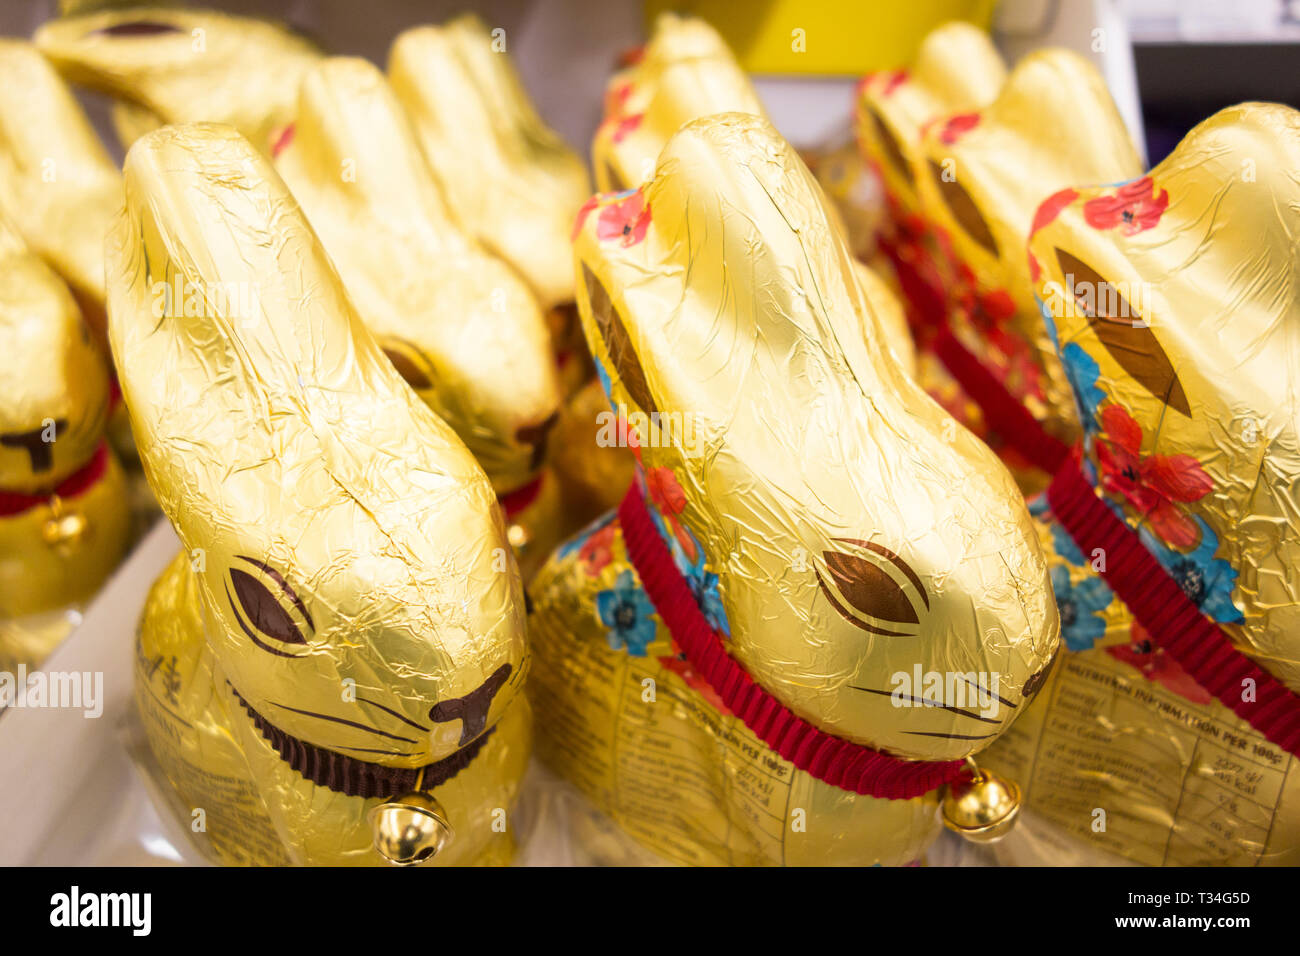 Lindt Golden Milk Chocolate and Dark chocolate bunnies on a supermarket shelf in the UK Stock Photo